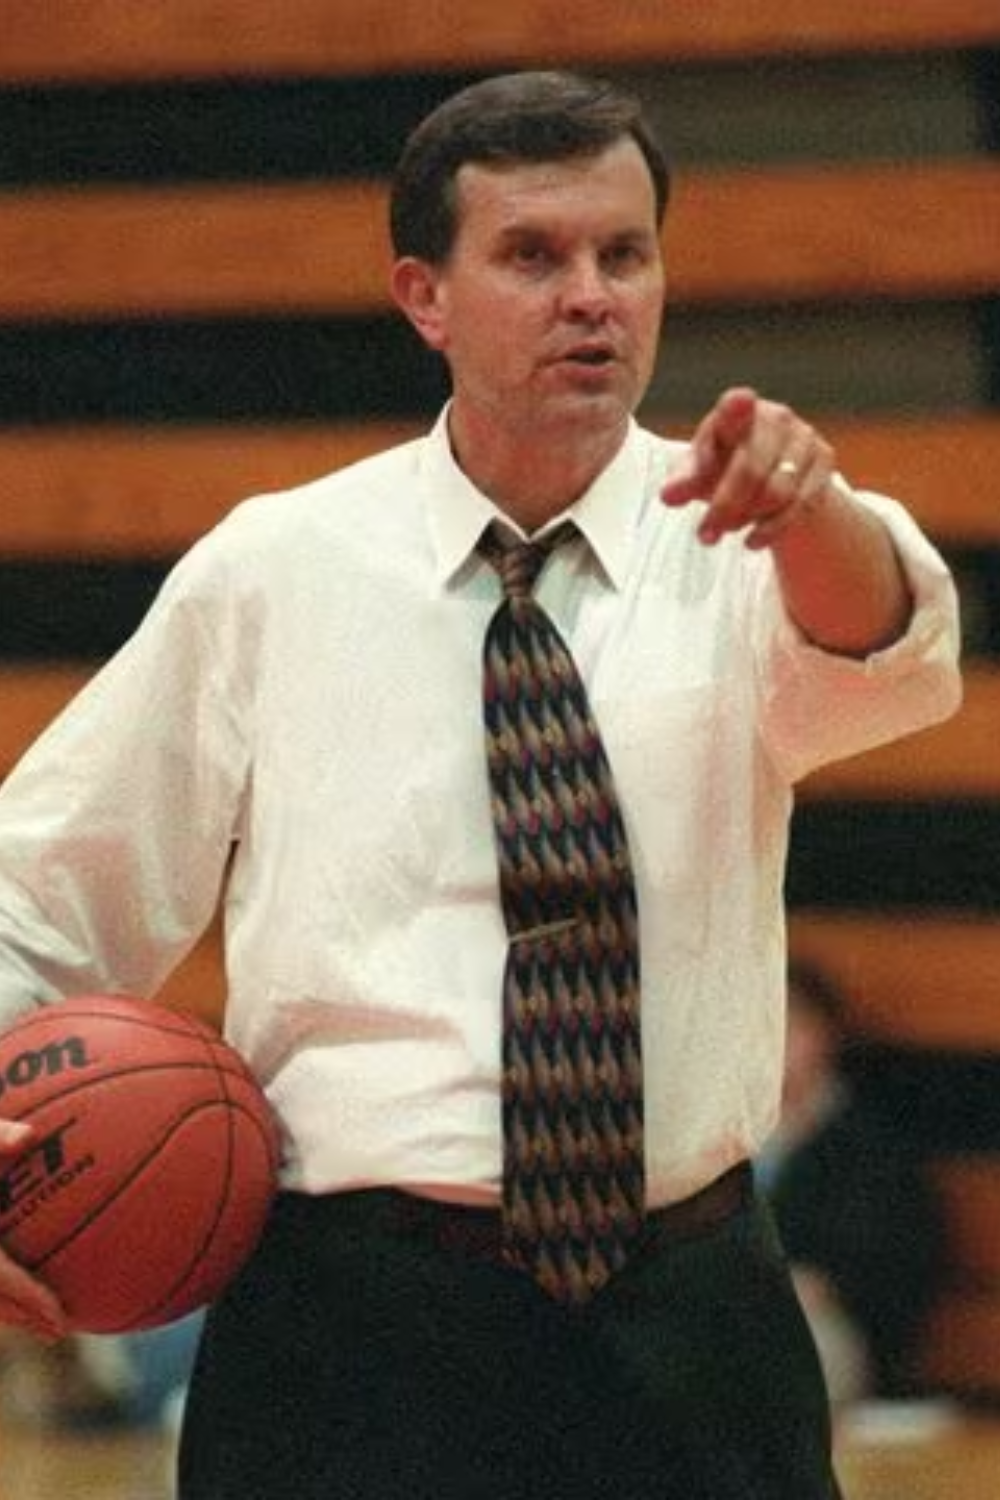 Georgia Basketball Coaching Icon David Boyd